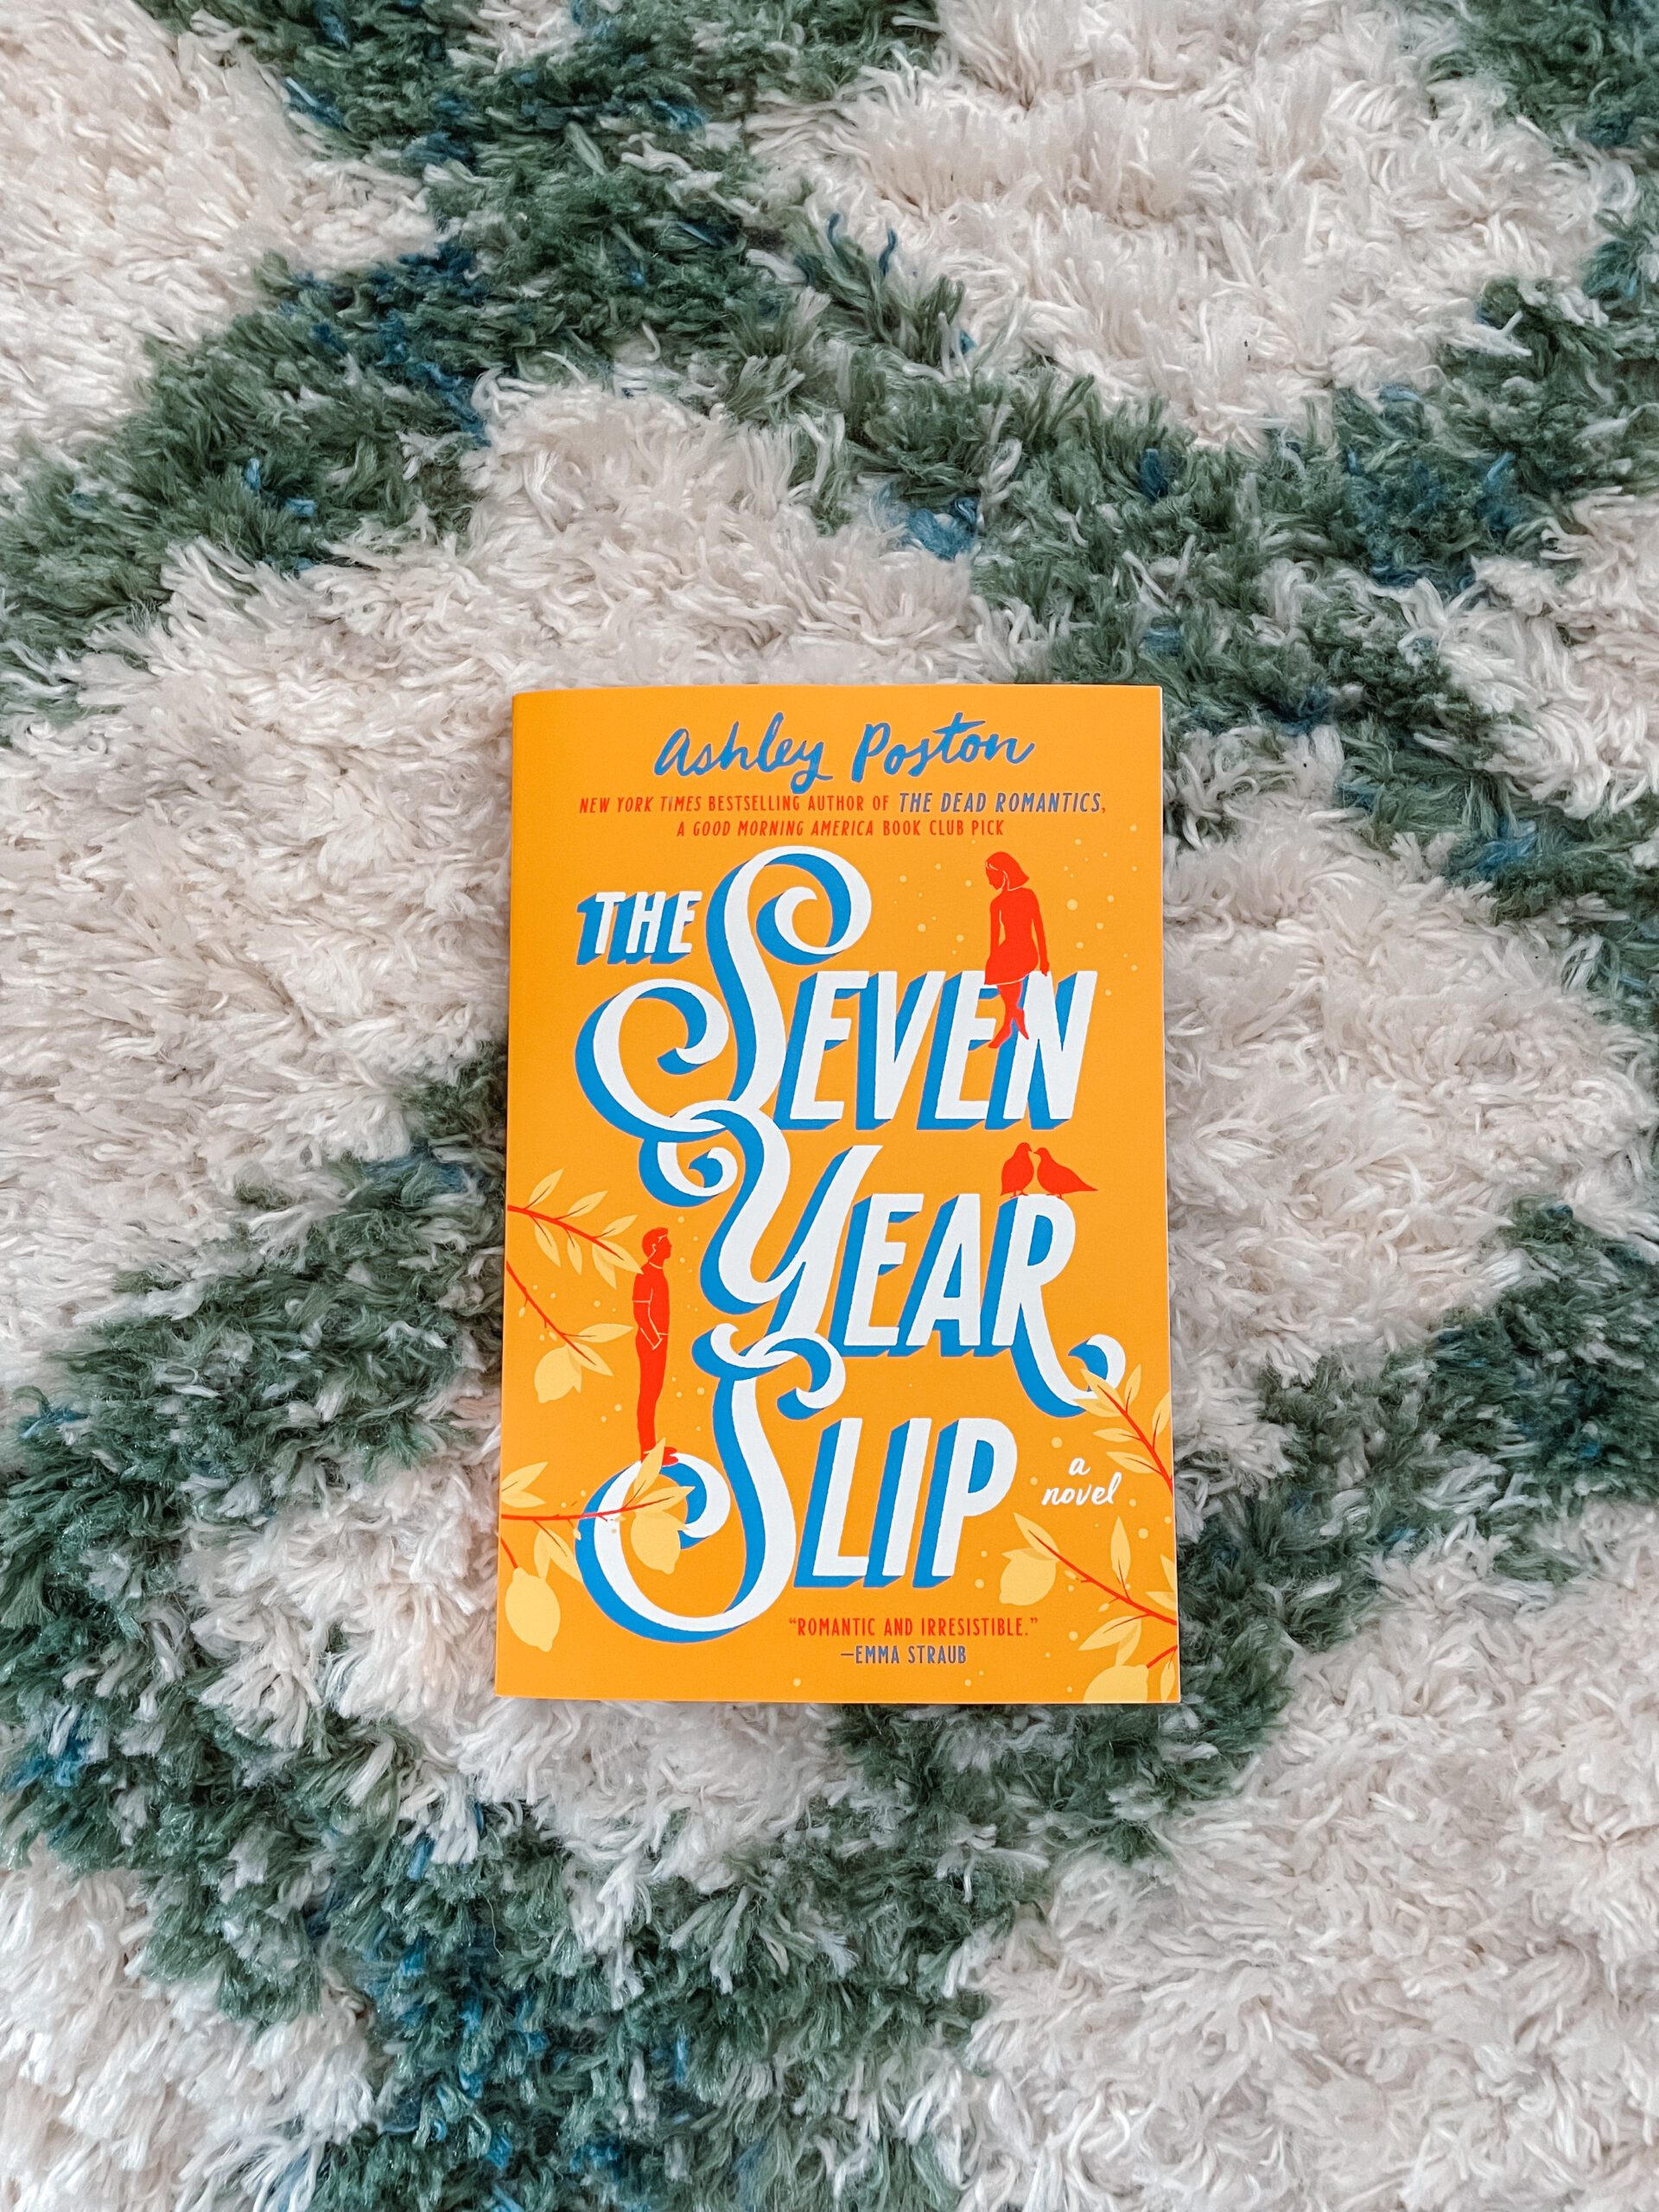 Mini-Reviews #24: The Seven Year Slip, Bad Summer People & Royal Blood -  Merrily Kristin Merrily Kristin